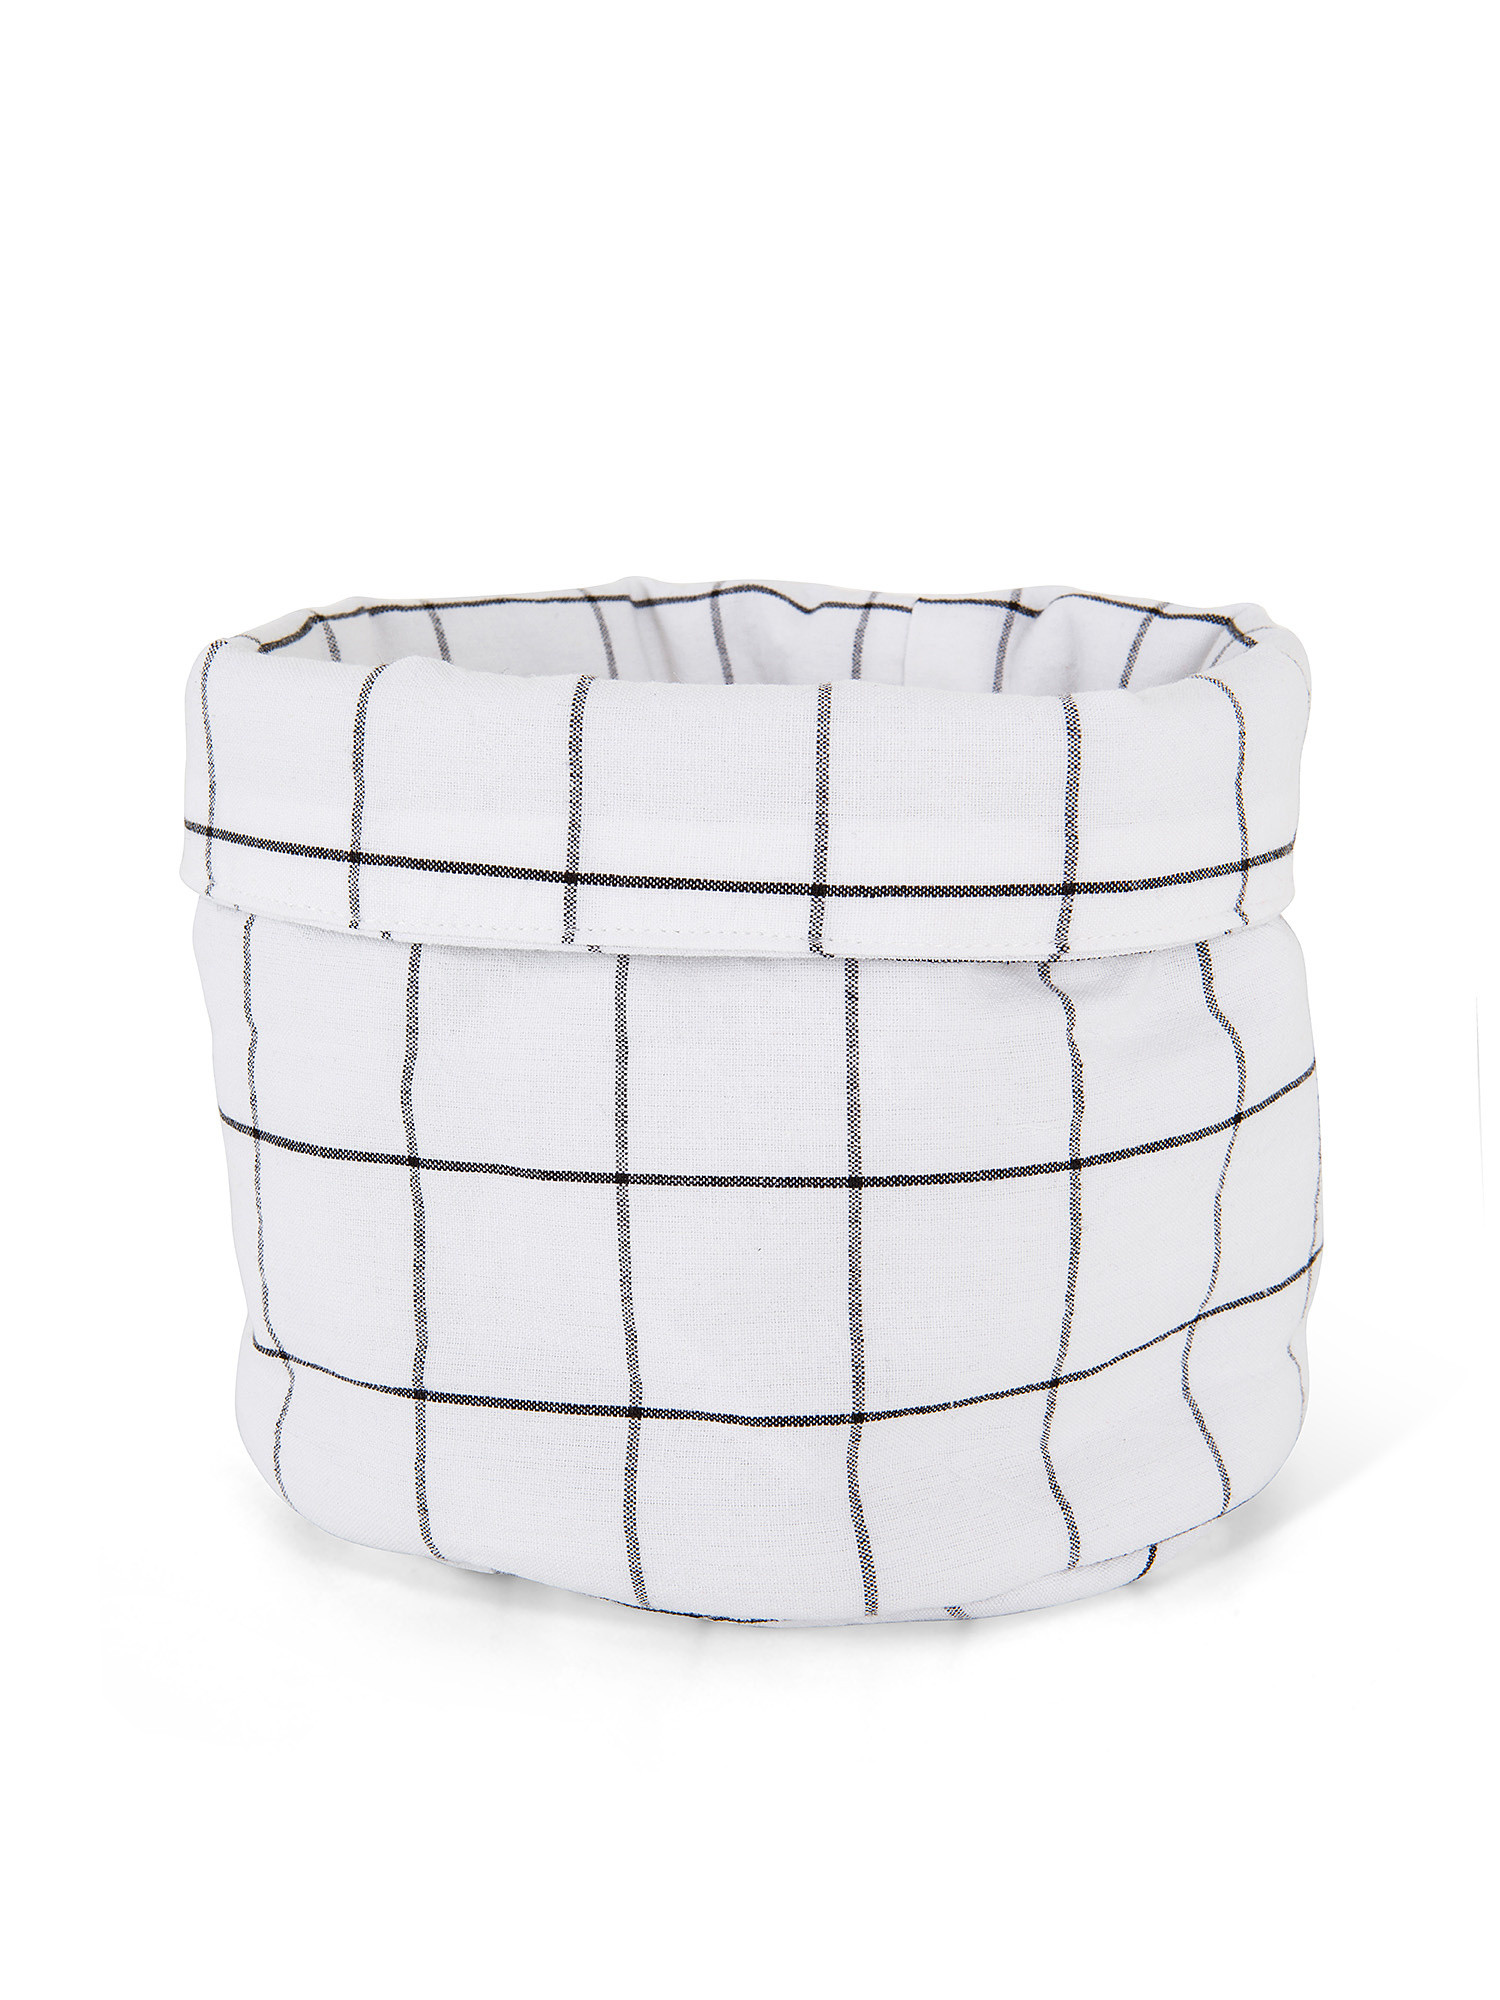 Check pattern washed cotton basket, White, large image number 1